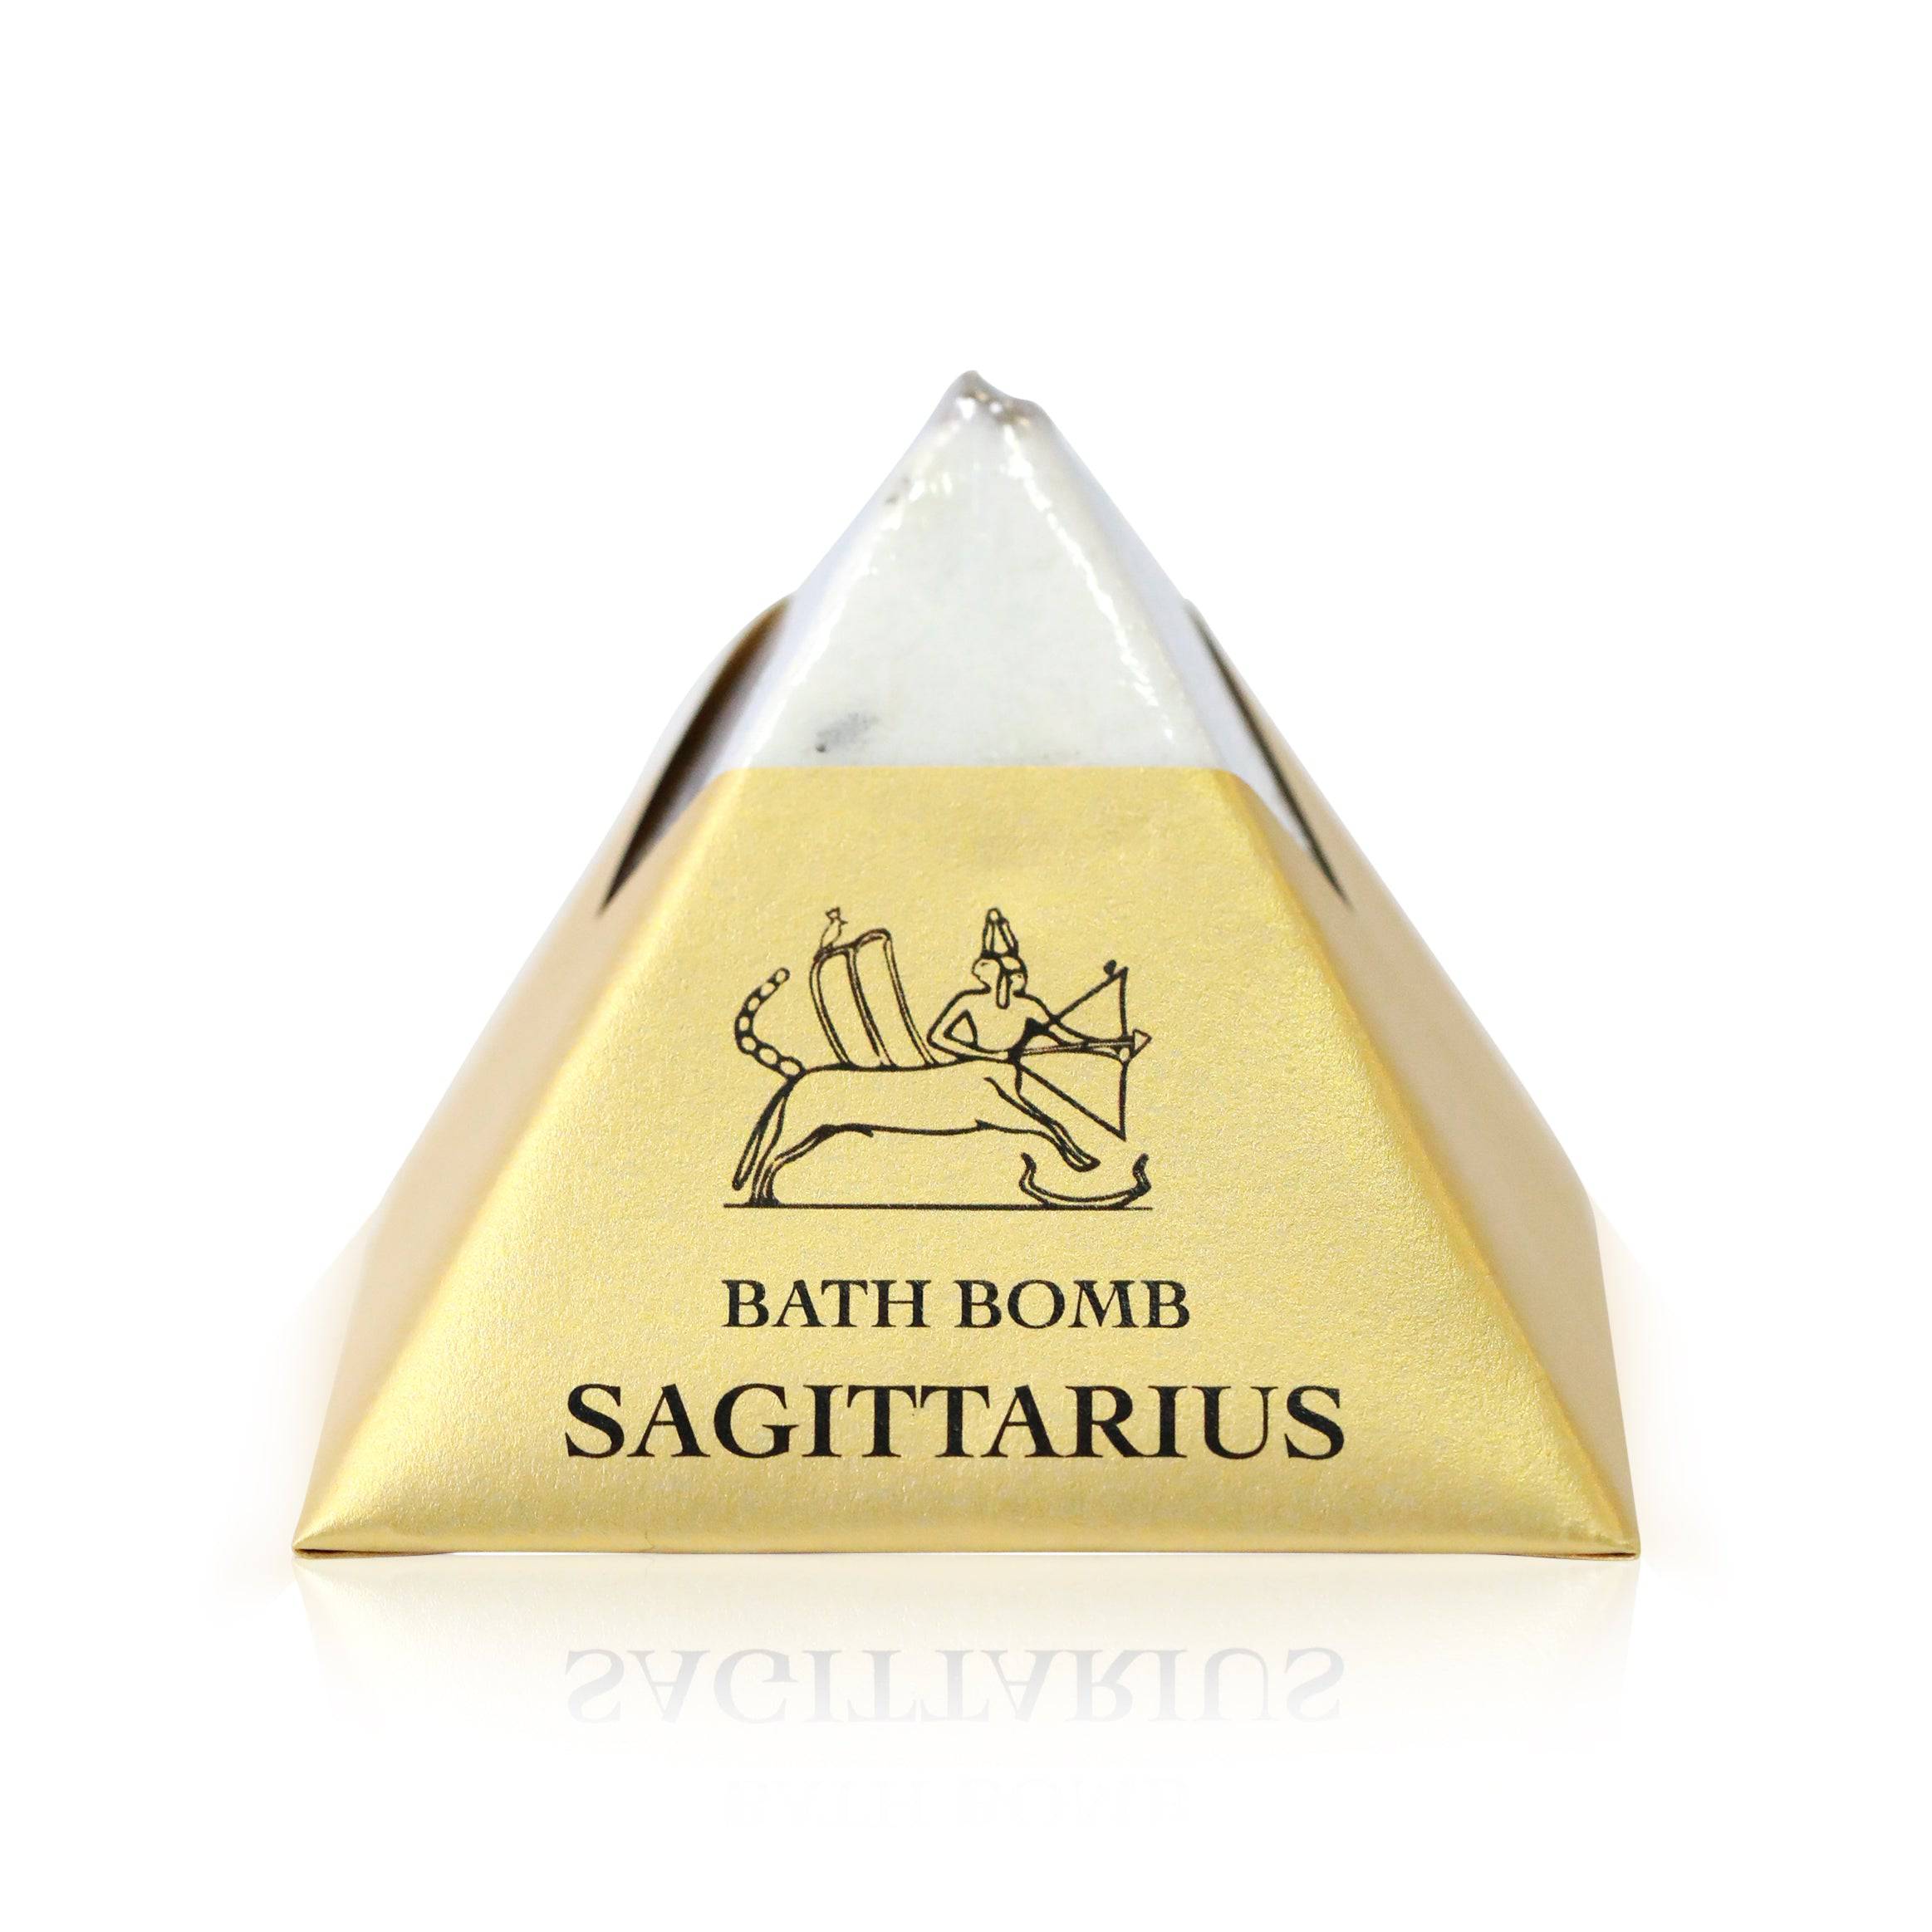 Sagittarius Zodiac Sign Pyramid Bath Bomb - The Gilded Witch